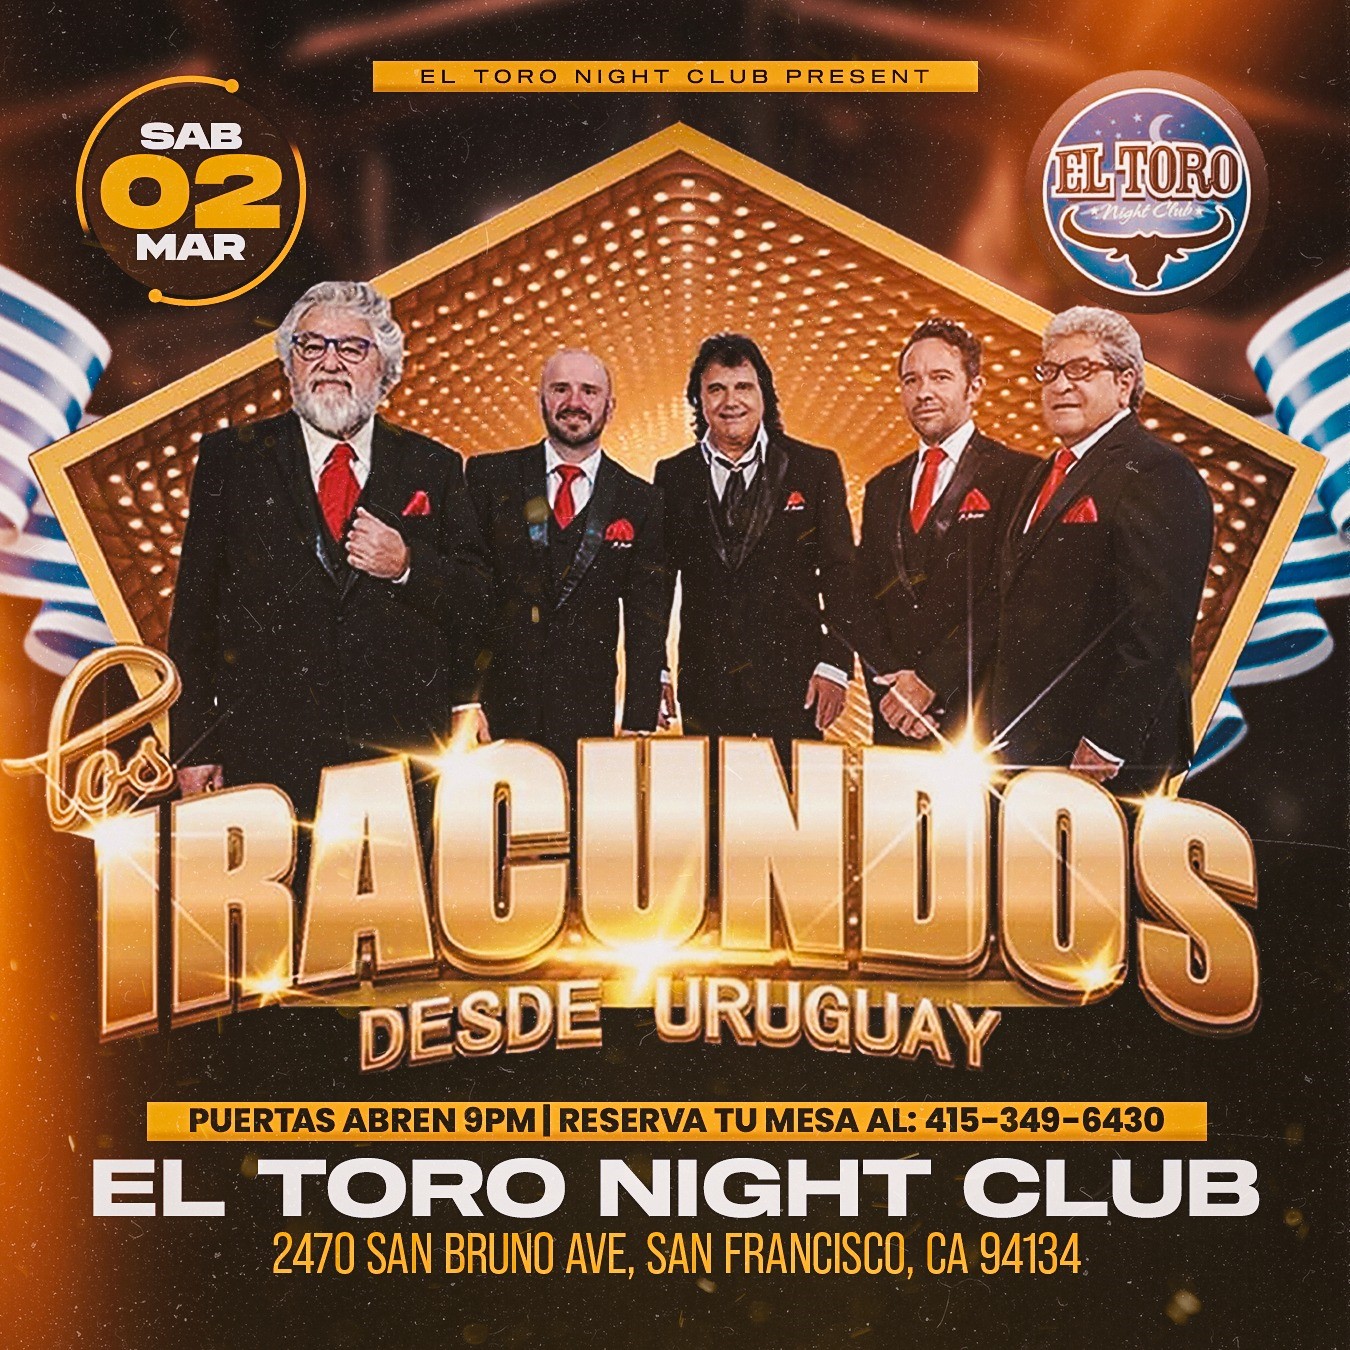 Los Inracundos  on Mar 02, 21:00@TORO SAN FRANCISCO - Buy tickets and Get information on farallonpresenta farallonpresenta